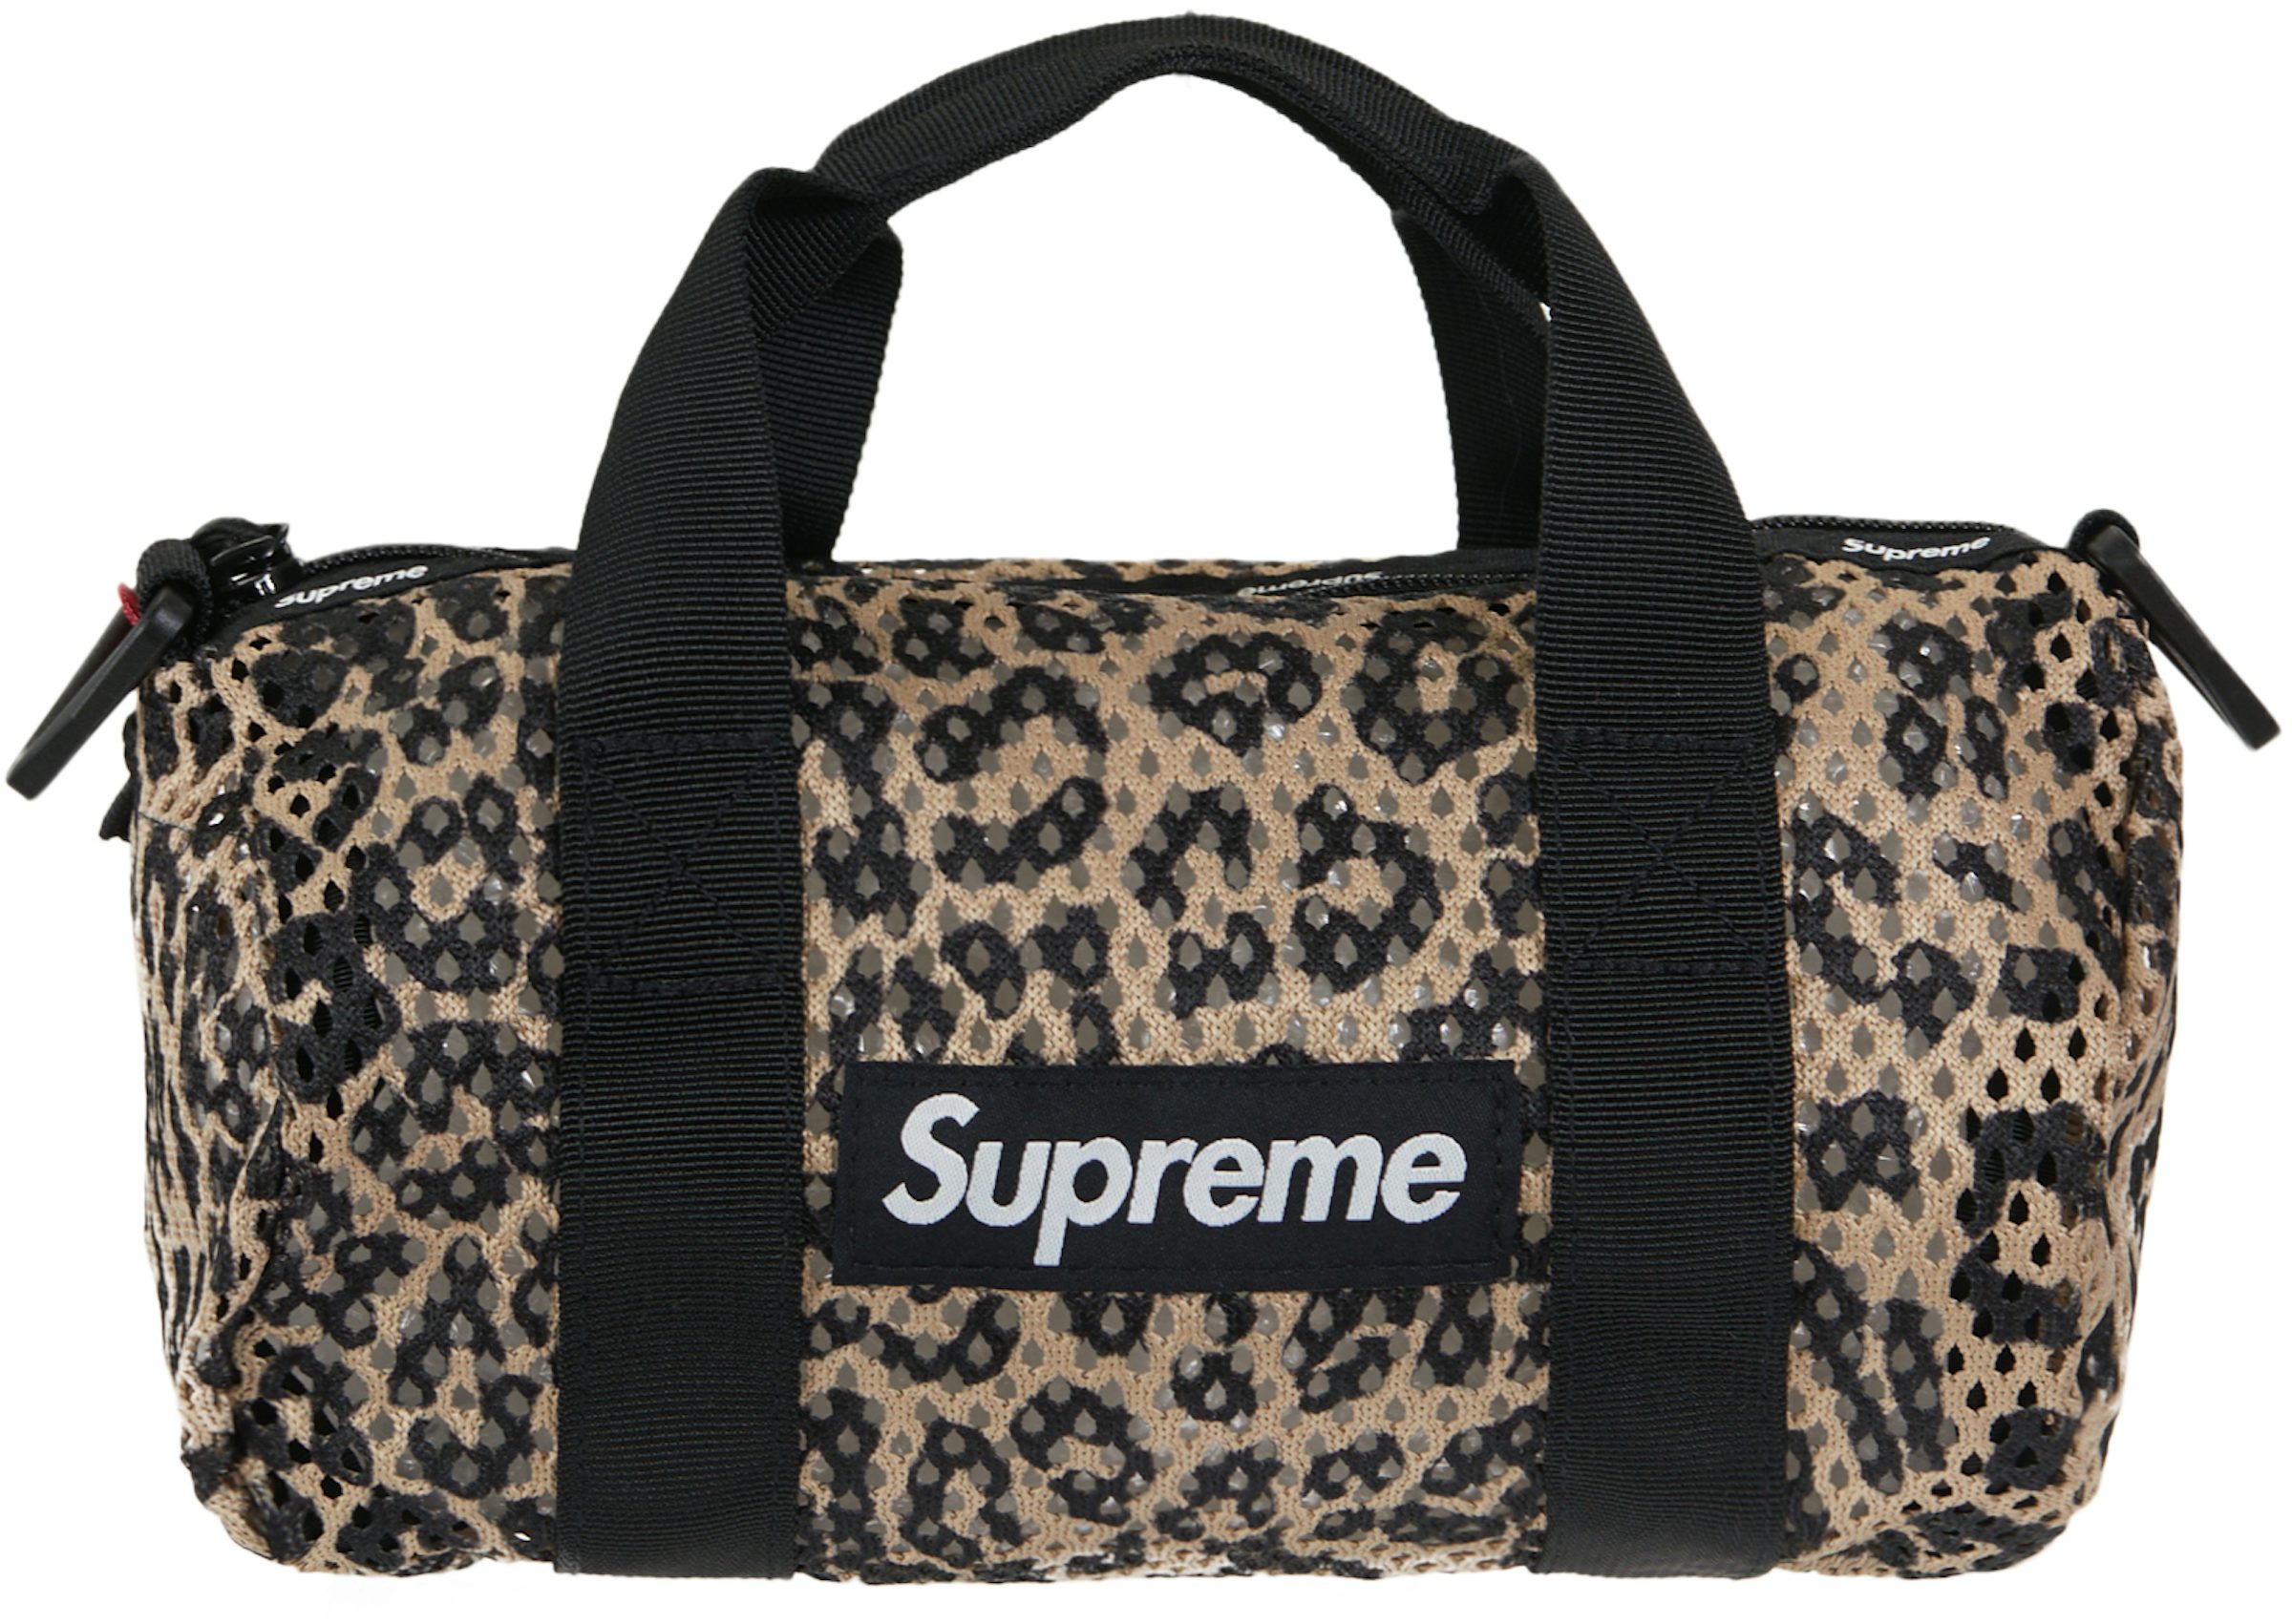 Supreme Mesh Mini Duffle Bag LeopardSupreme Mesh Mini Duffle Bag Leopard -  OFour